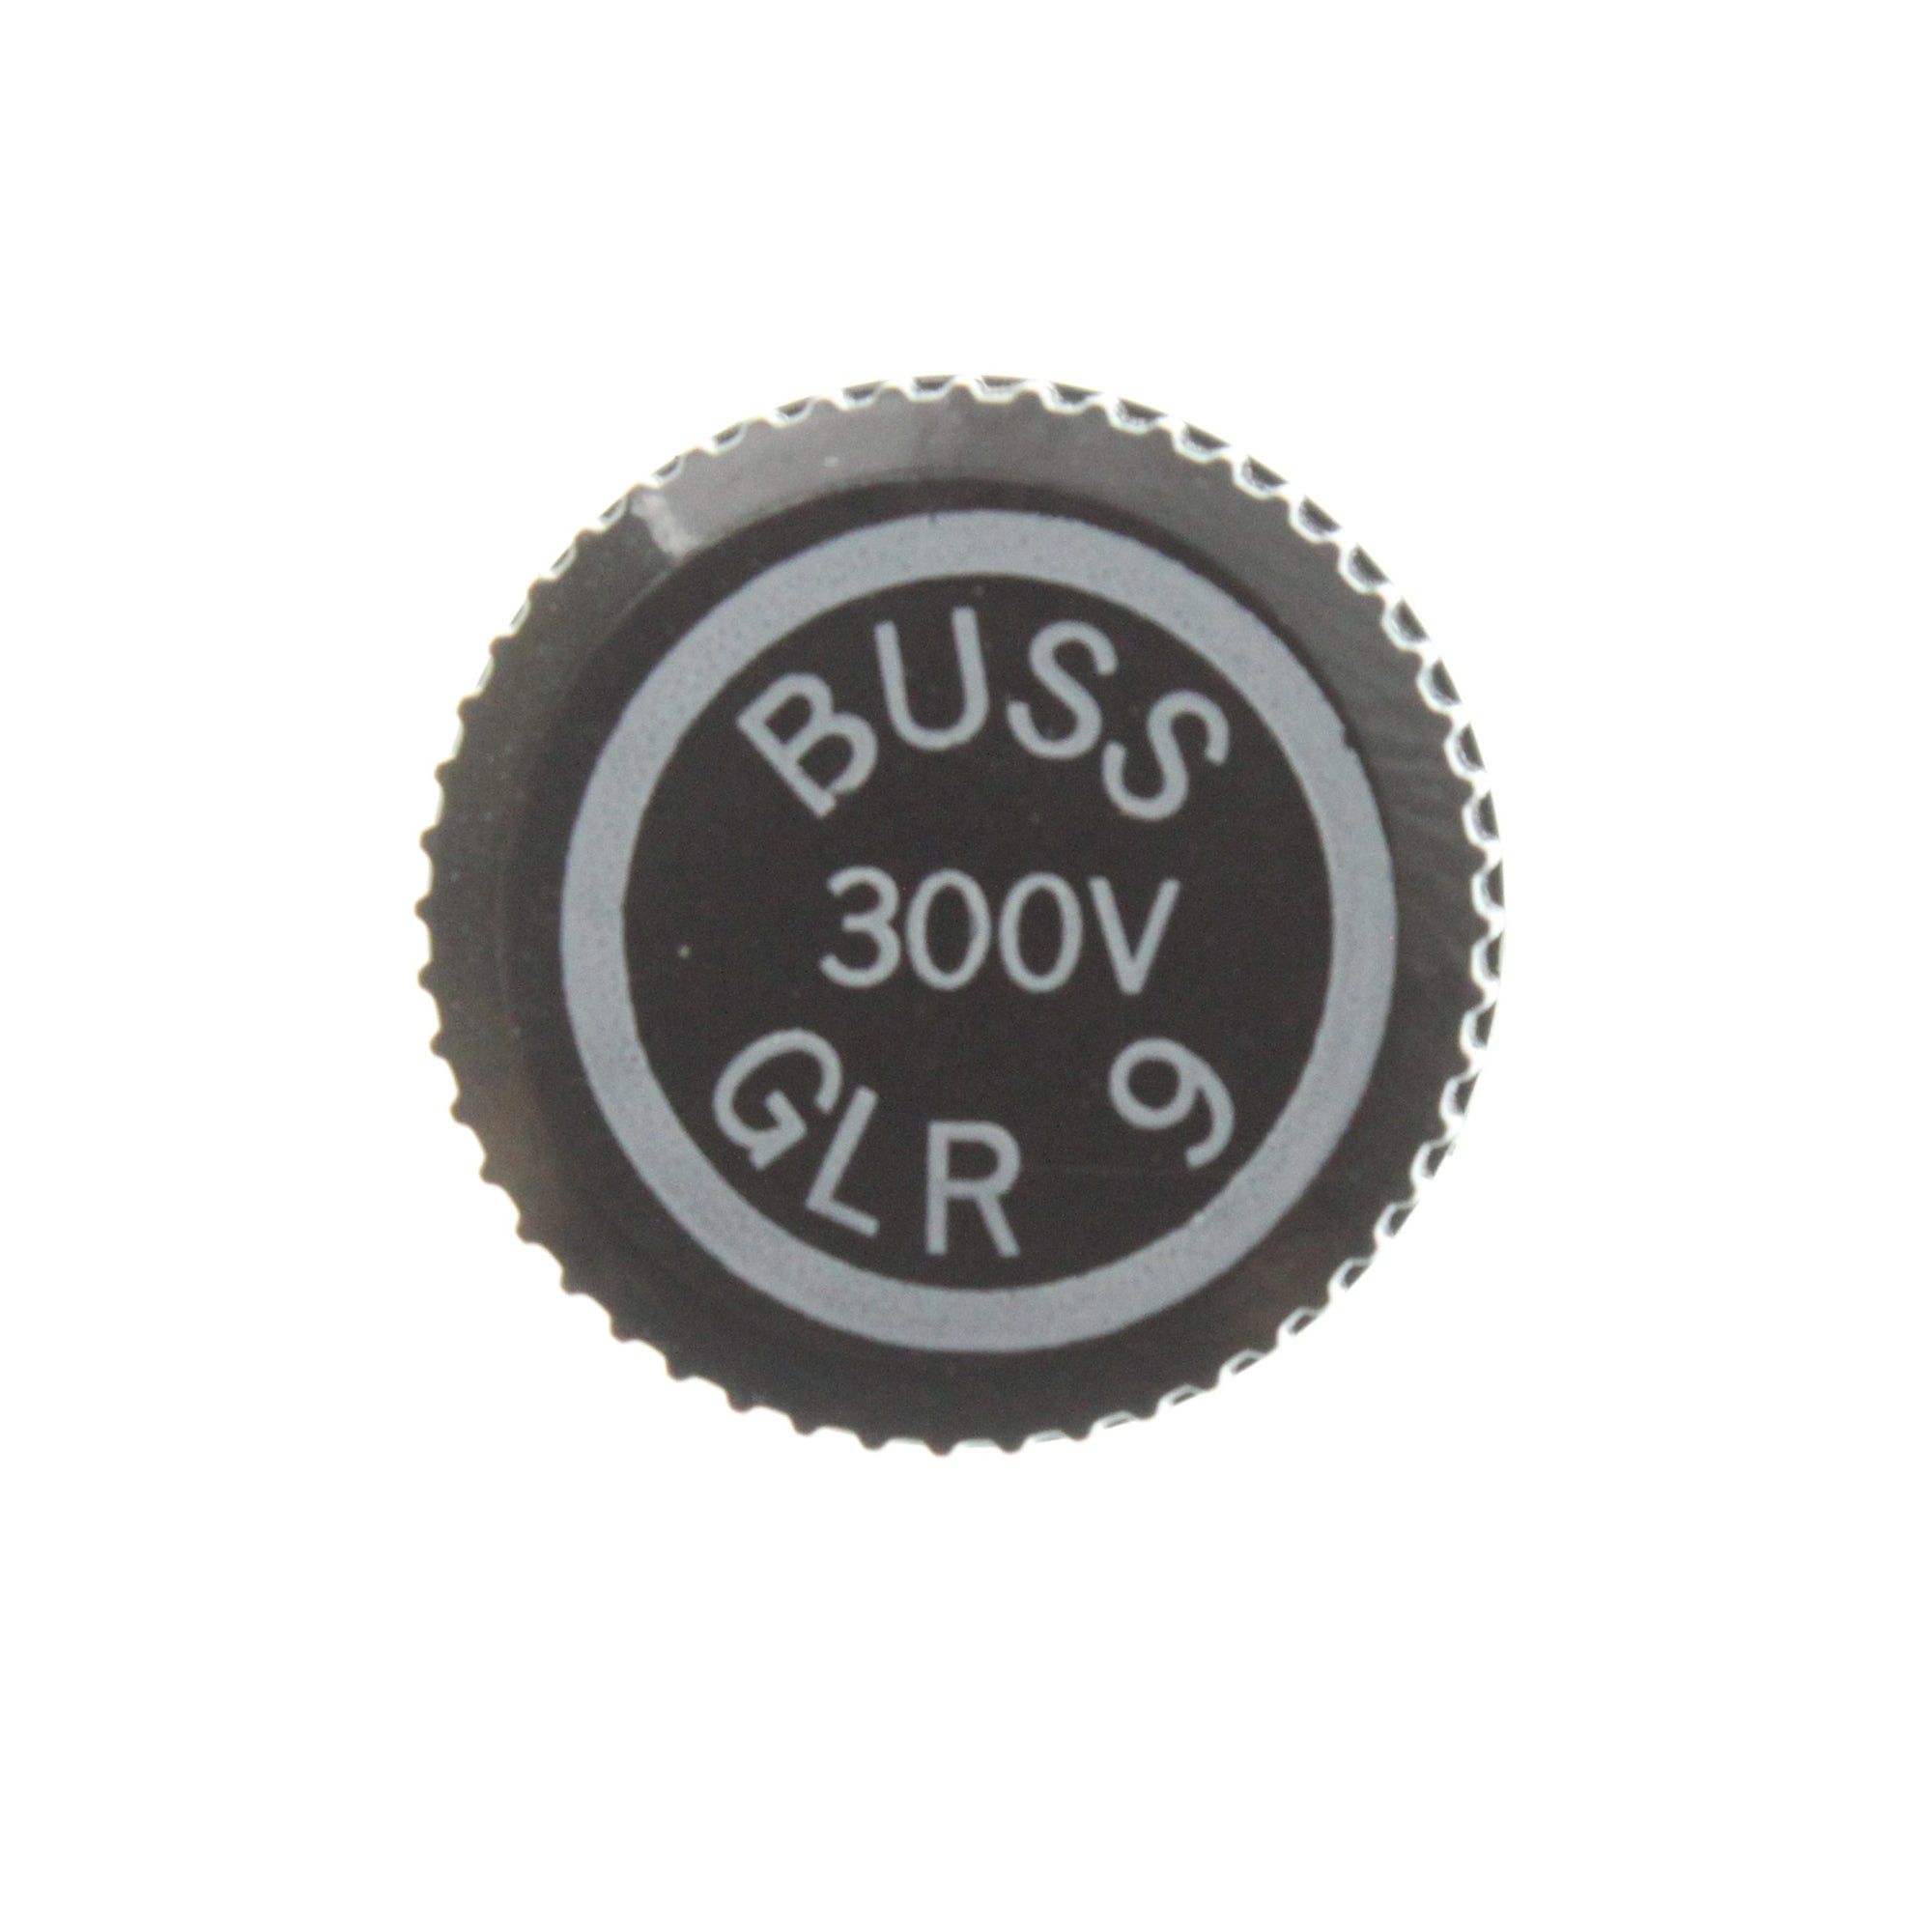 Bussman, BUSSMAN GLR-9 NON-REJECTING FAST-ACTING INLINE FUSE 300-VOLT, 9-AMP